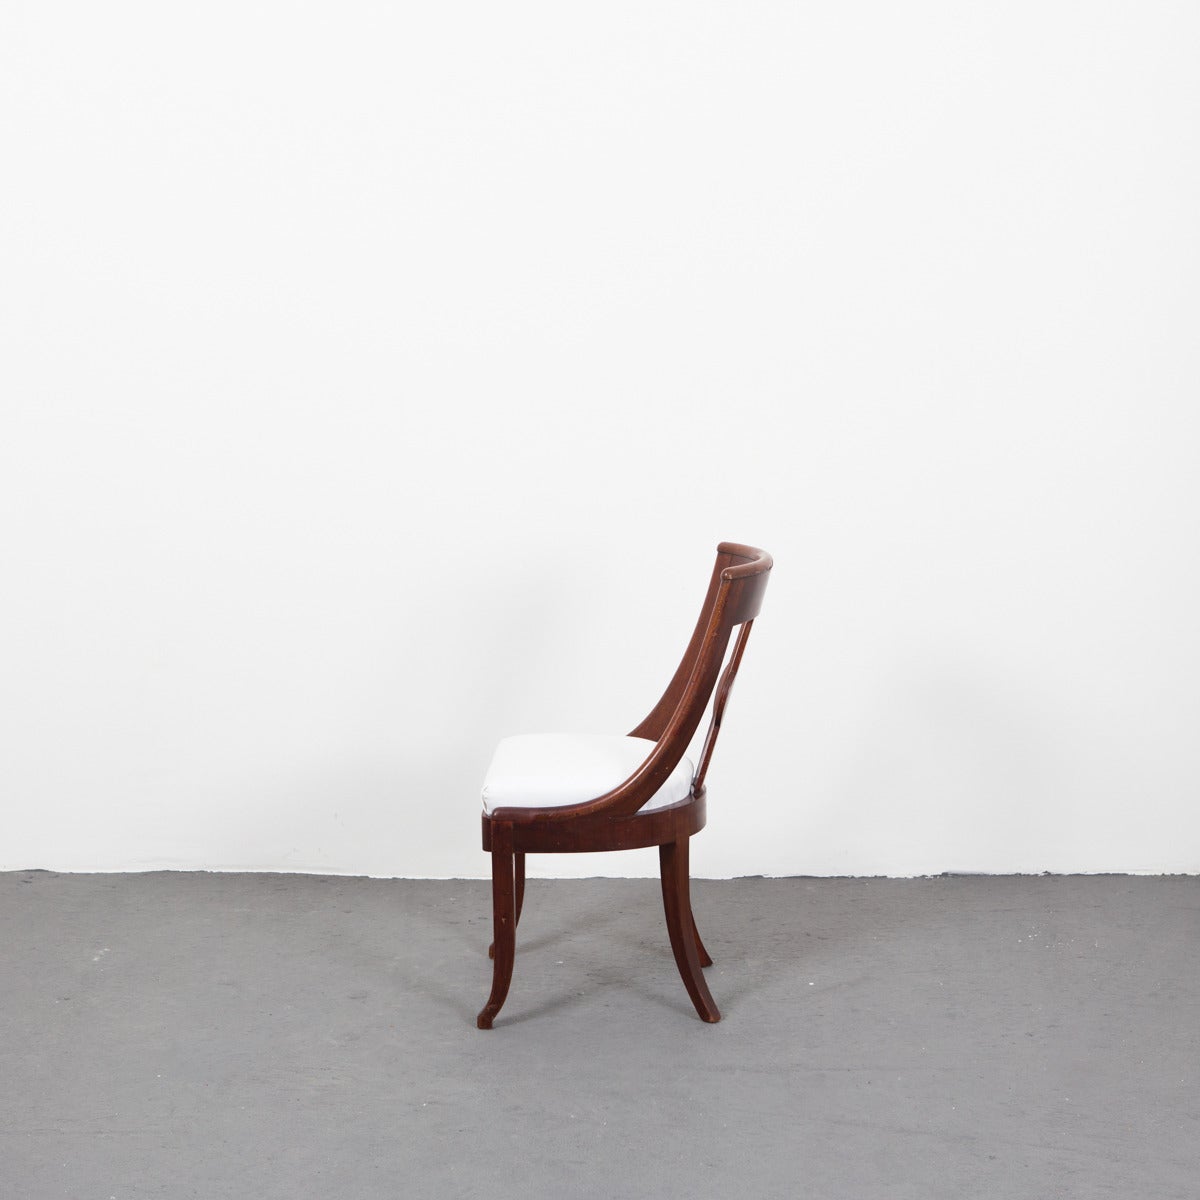 A Swedish Karl Johan side chair made in mahogany, early 19th century.